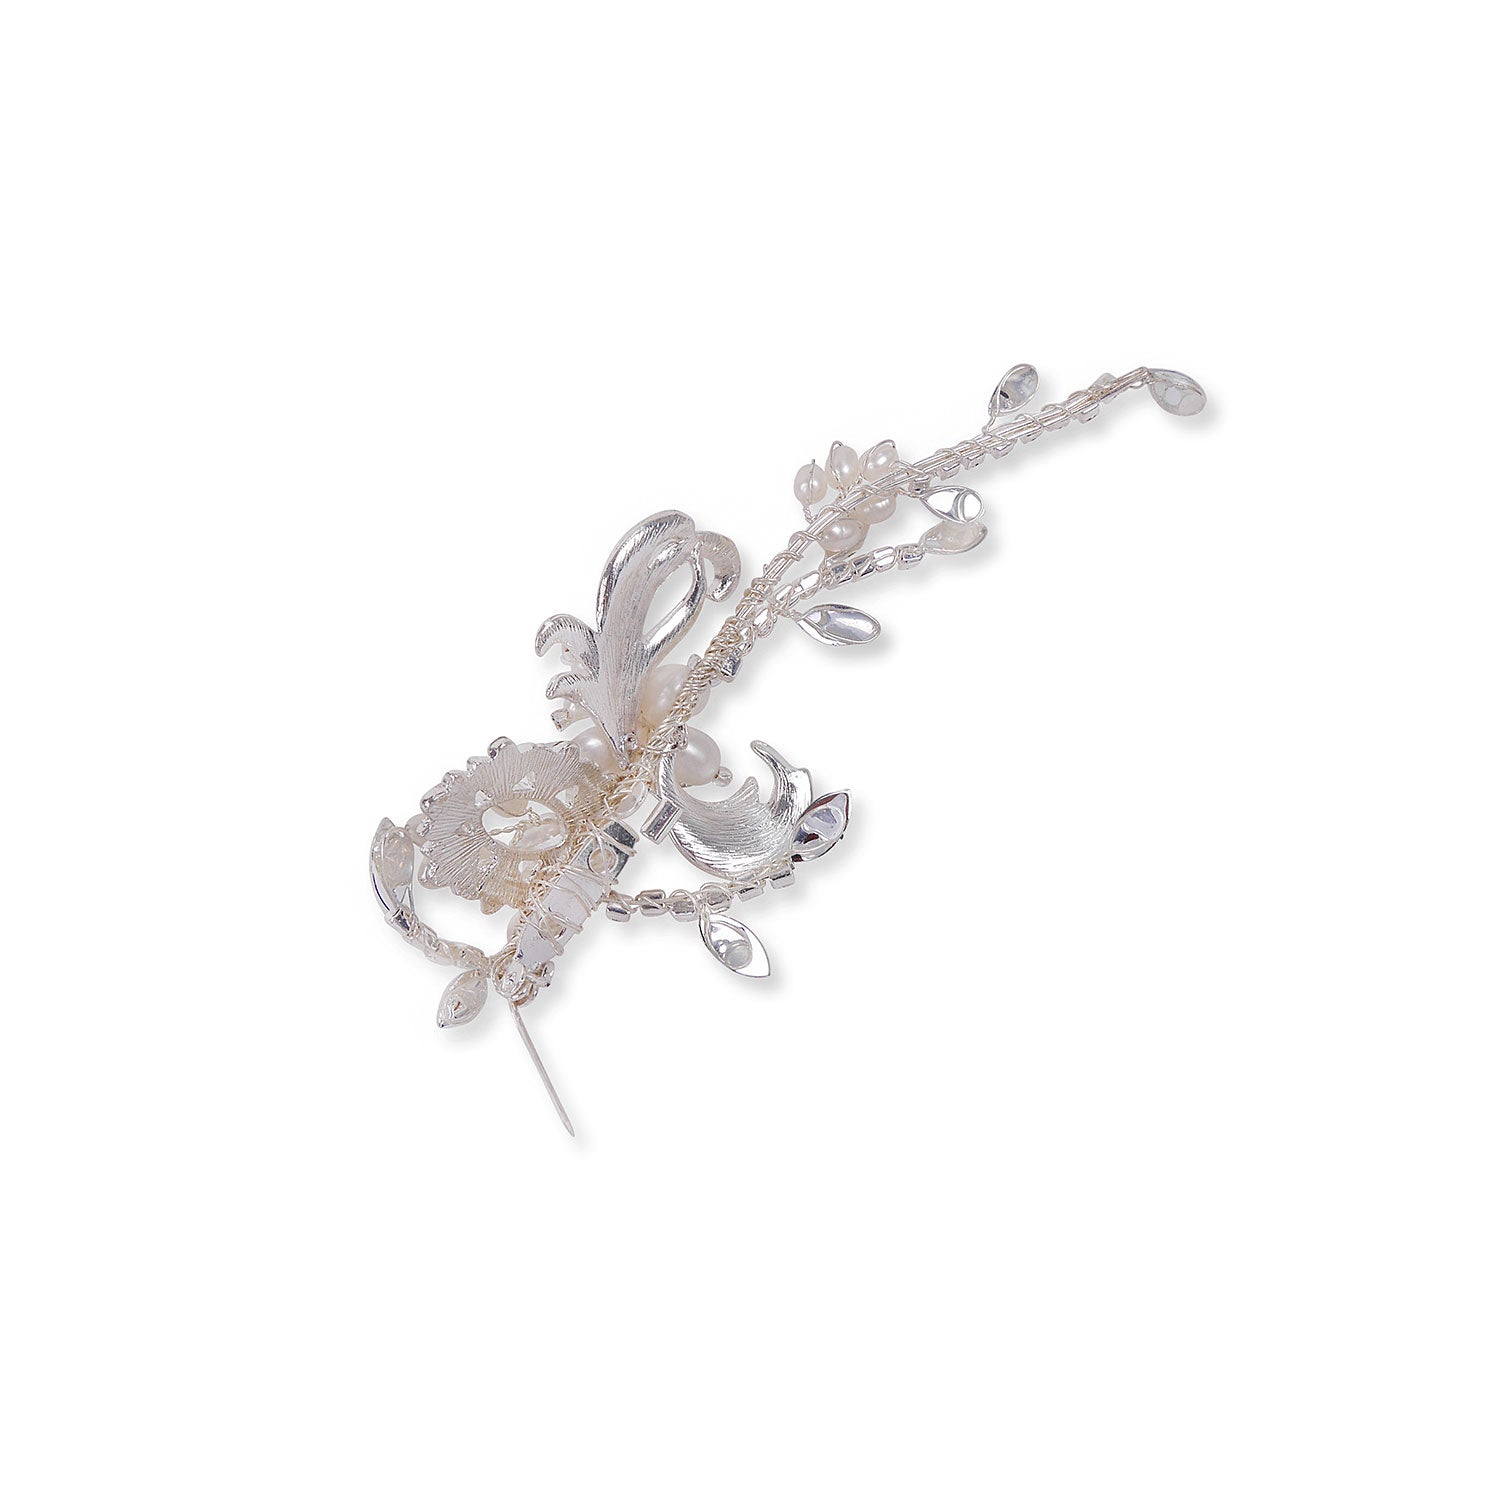 Floral Hair Vine Pin in Pearl